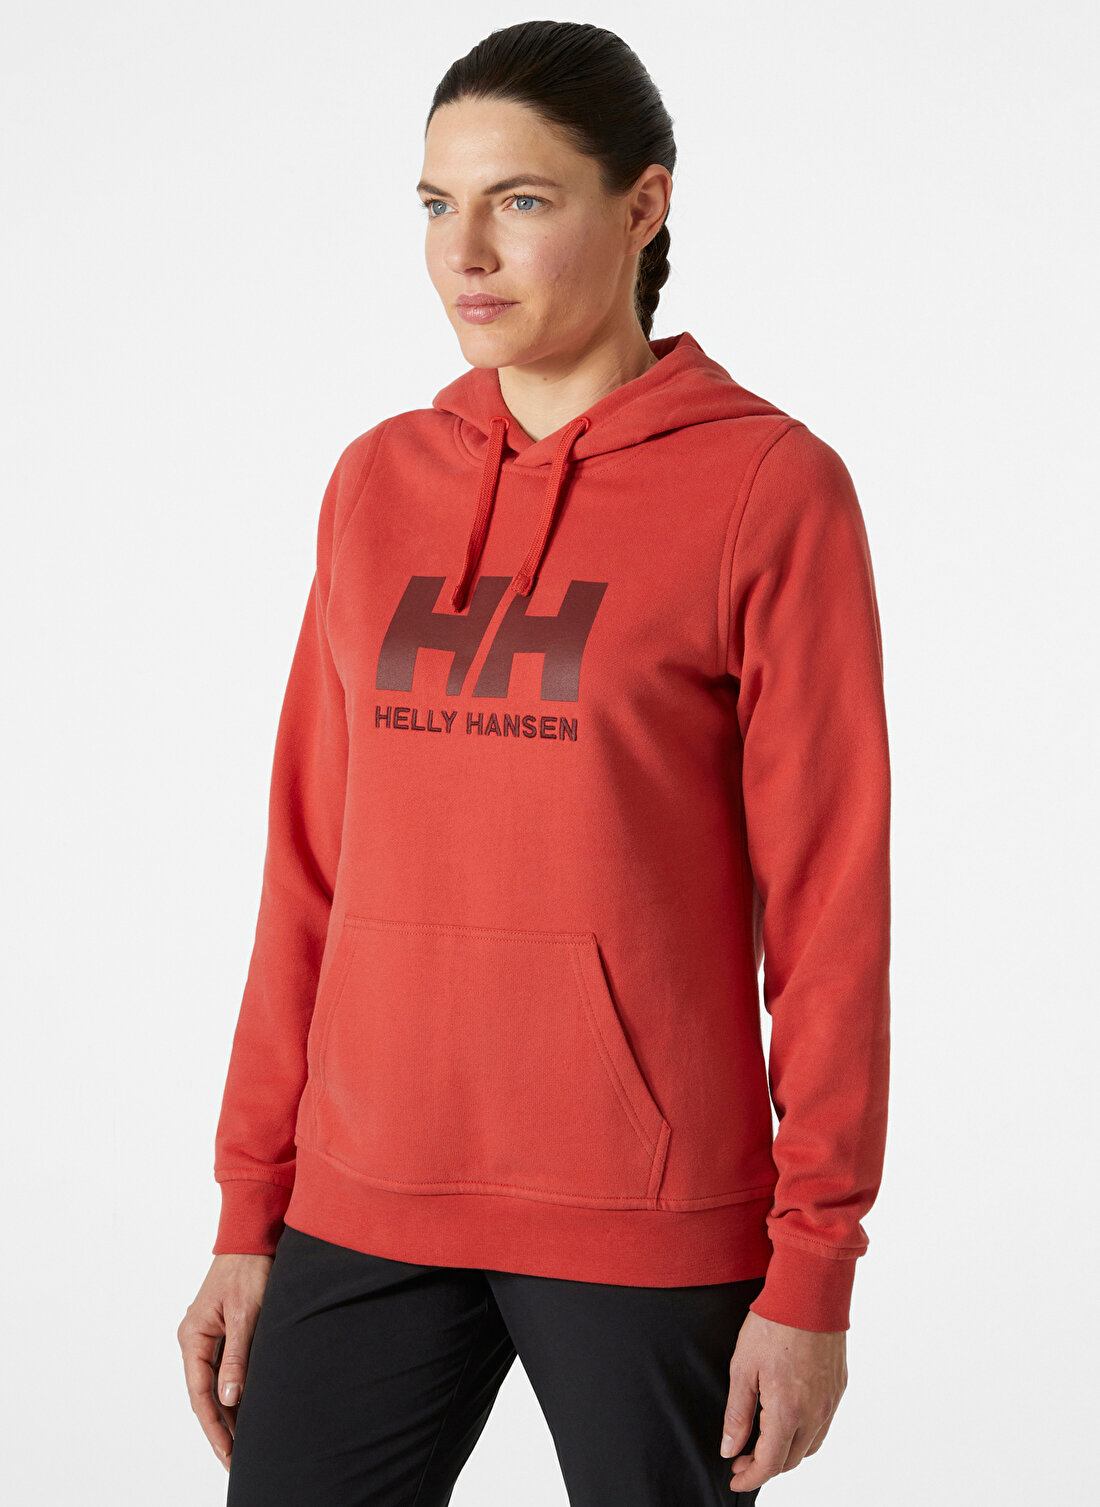 Helly Hansen Kırmızı Kadın Kapüşonlu Sweatshirt HHA.33978_HELLY HANSEN  W LOGO HOOD